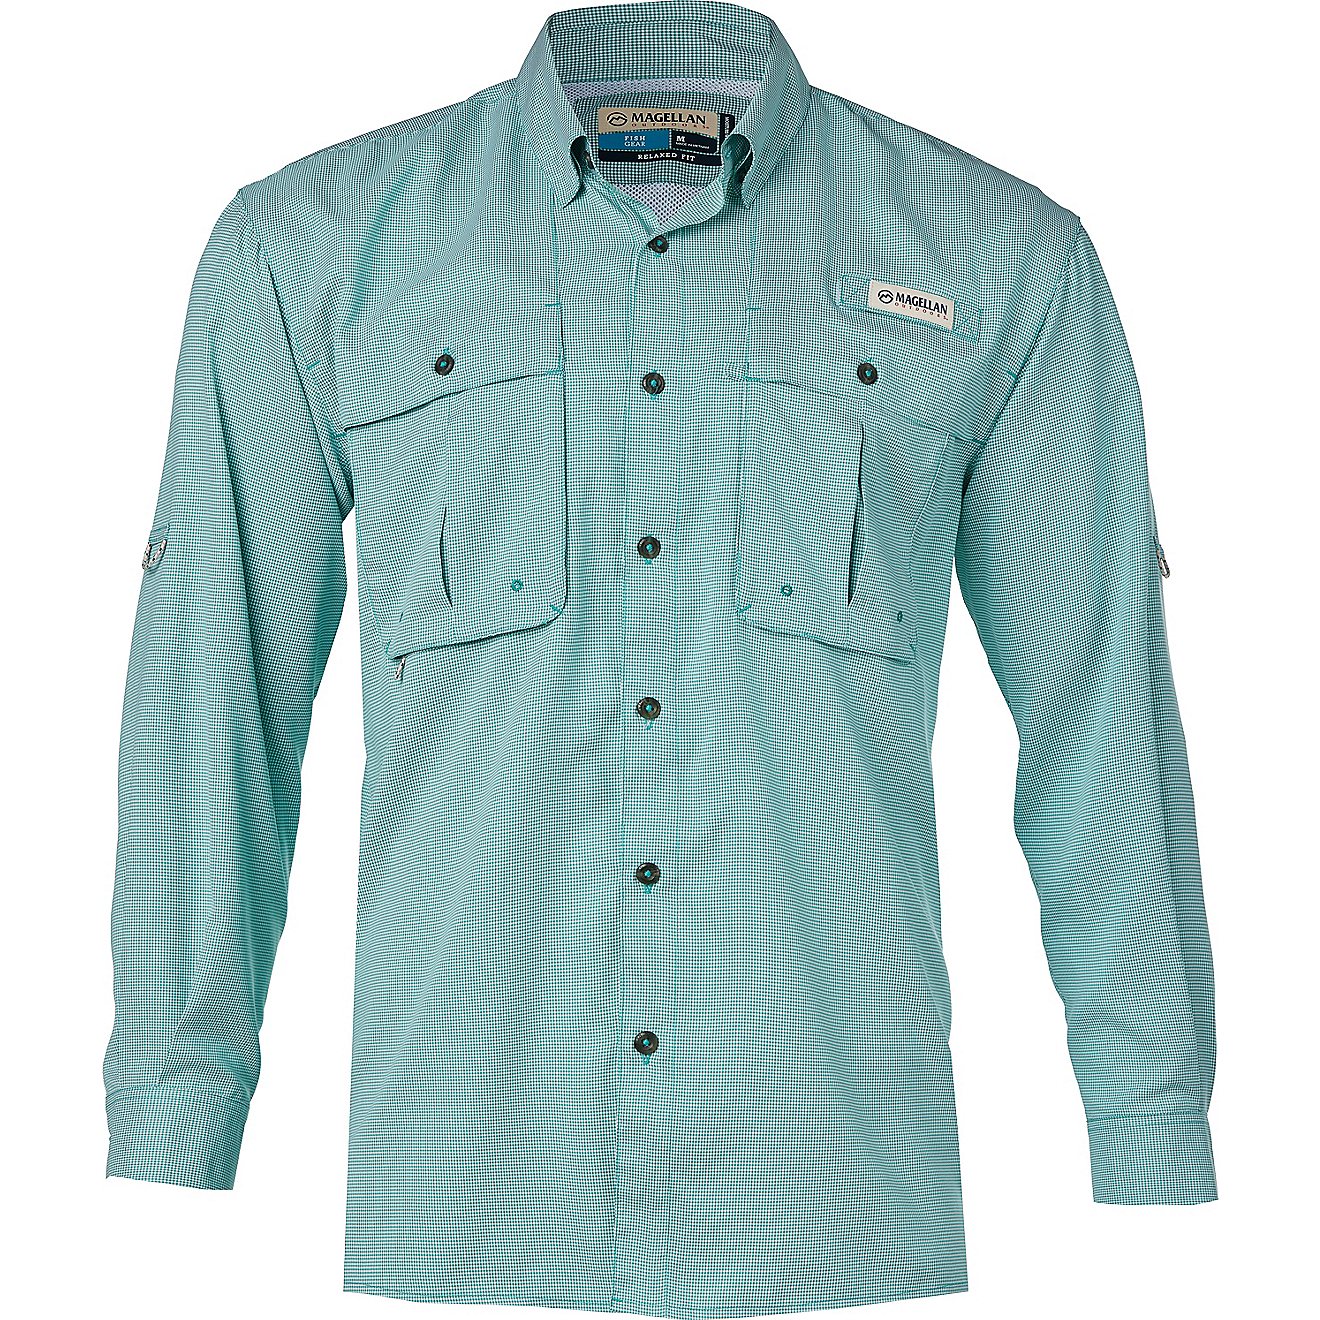 Magellan Outdoors Men's Fishing Shirt Short Sleeve Button-Down Fish Gear Top 